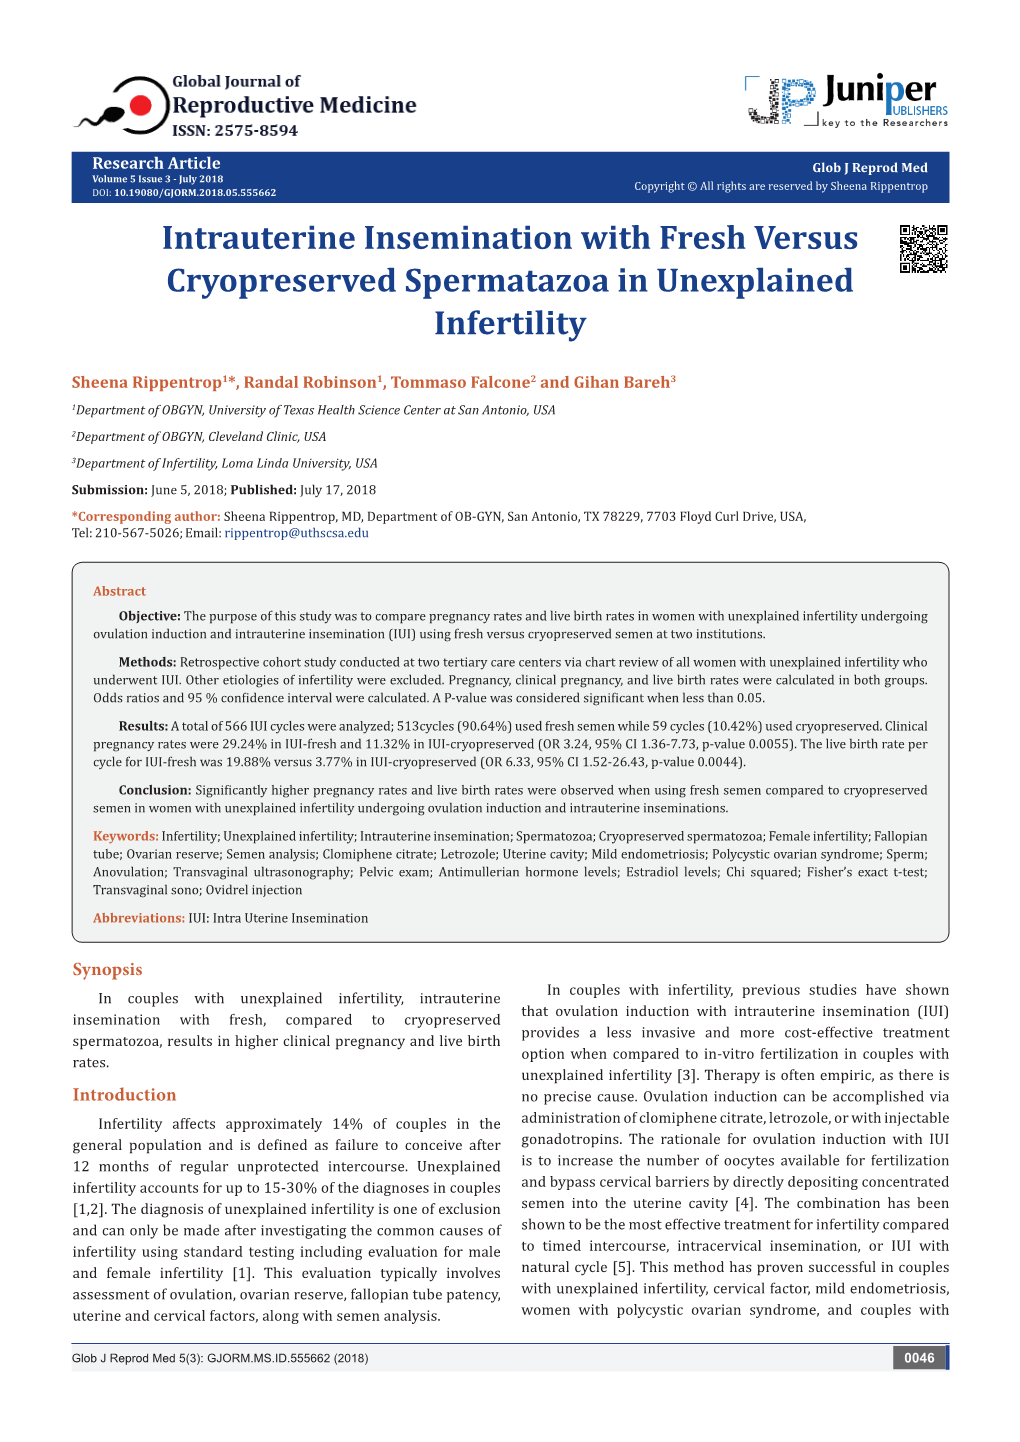 Intrauterine Insemination with Fresh Versus Cryopreserved Spermatazoa in Unexplained Infertility